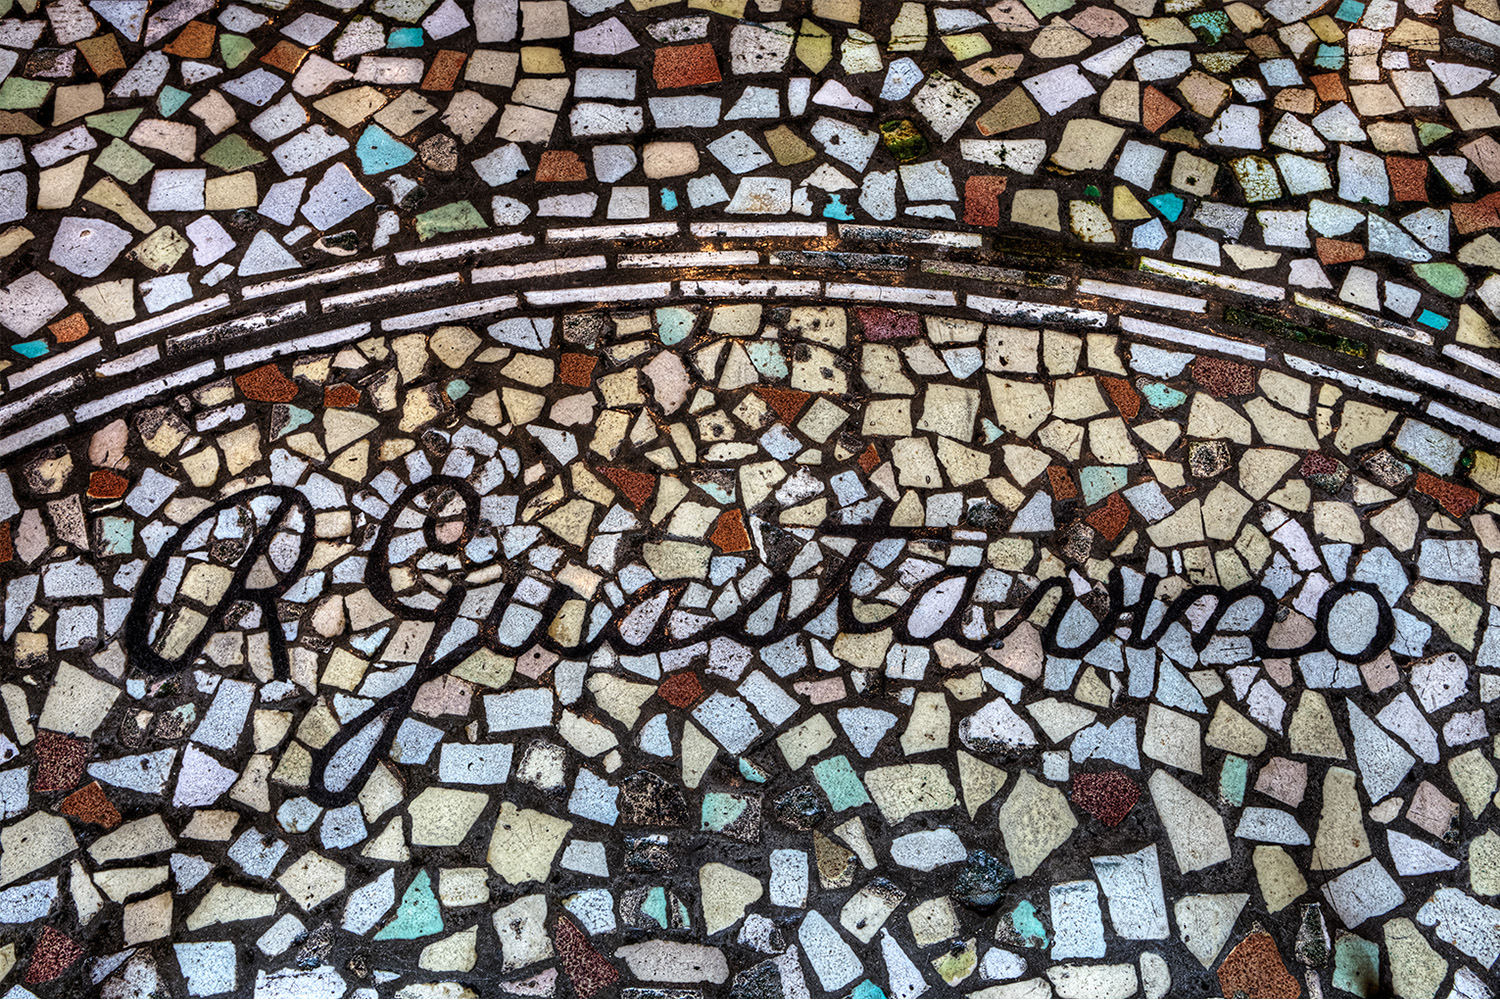 The lobby floor still boasts of Guastavino with his signature amongst broken tiles originally produced in his factory.